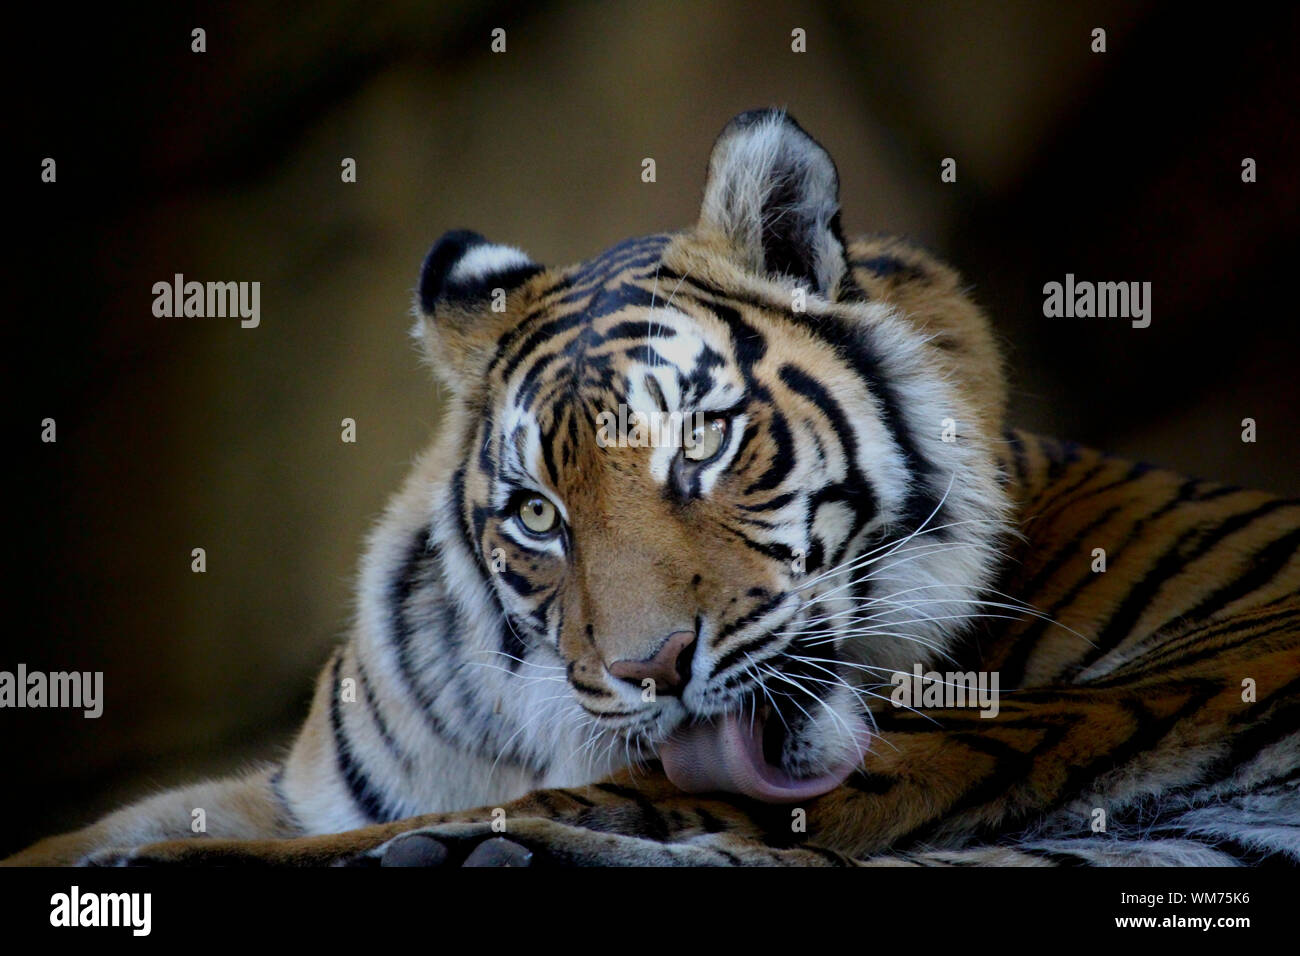 Panthera tigris sondaica - Tigre de Indonesia Foto de stock